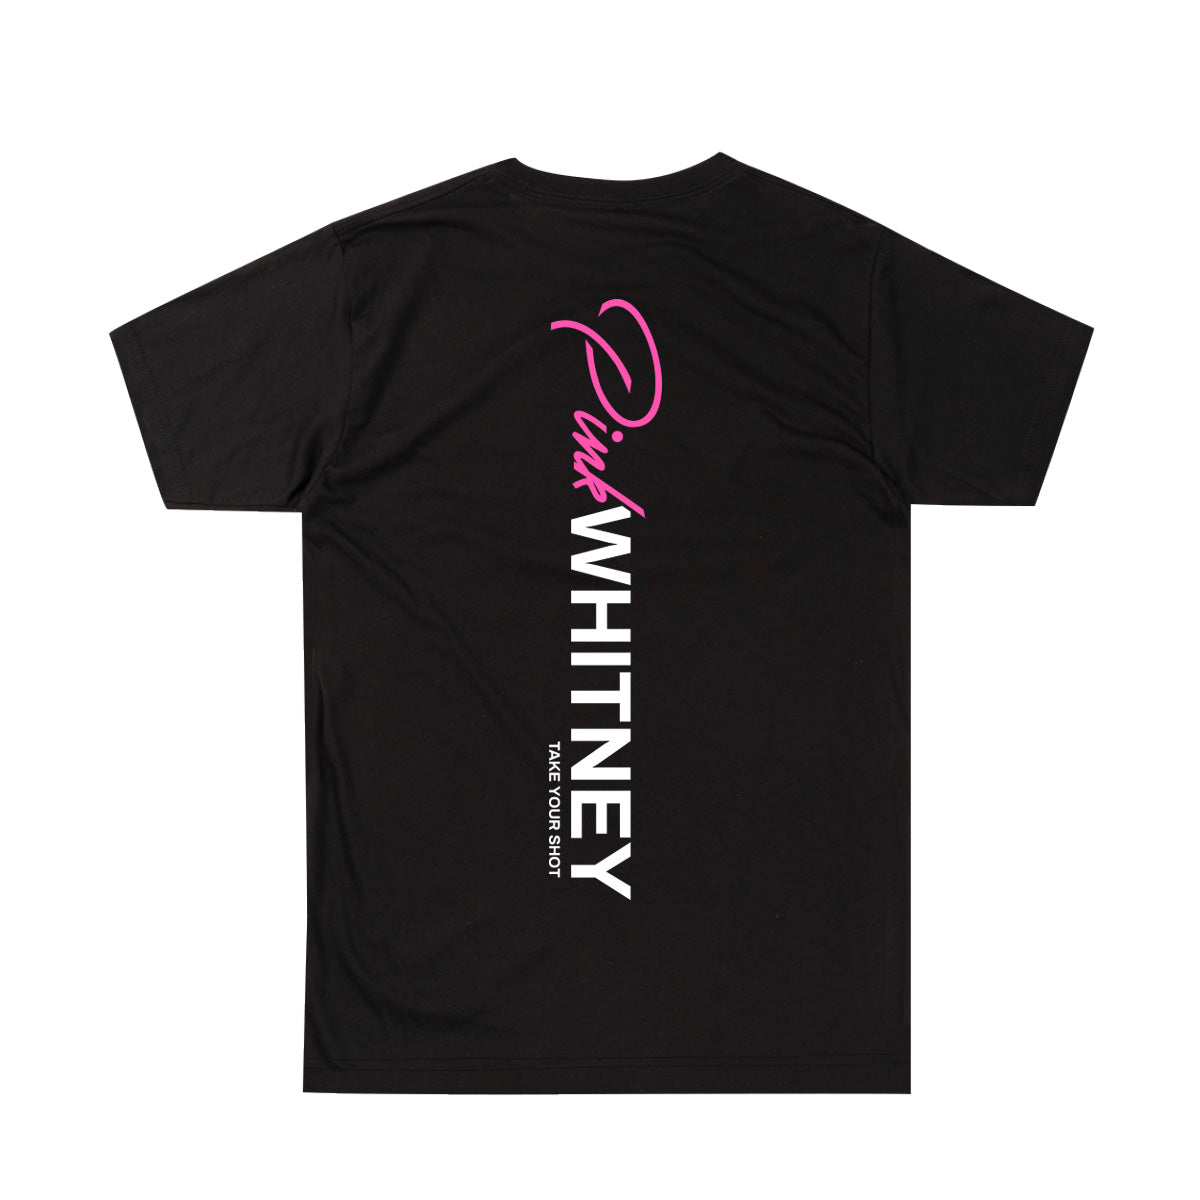 Pink Whitney Vertical Logo Tee